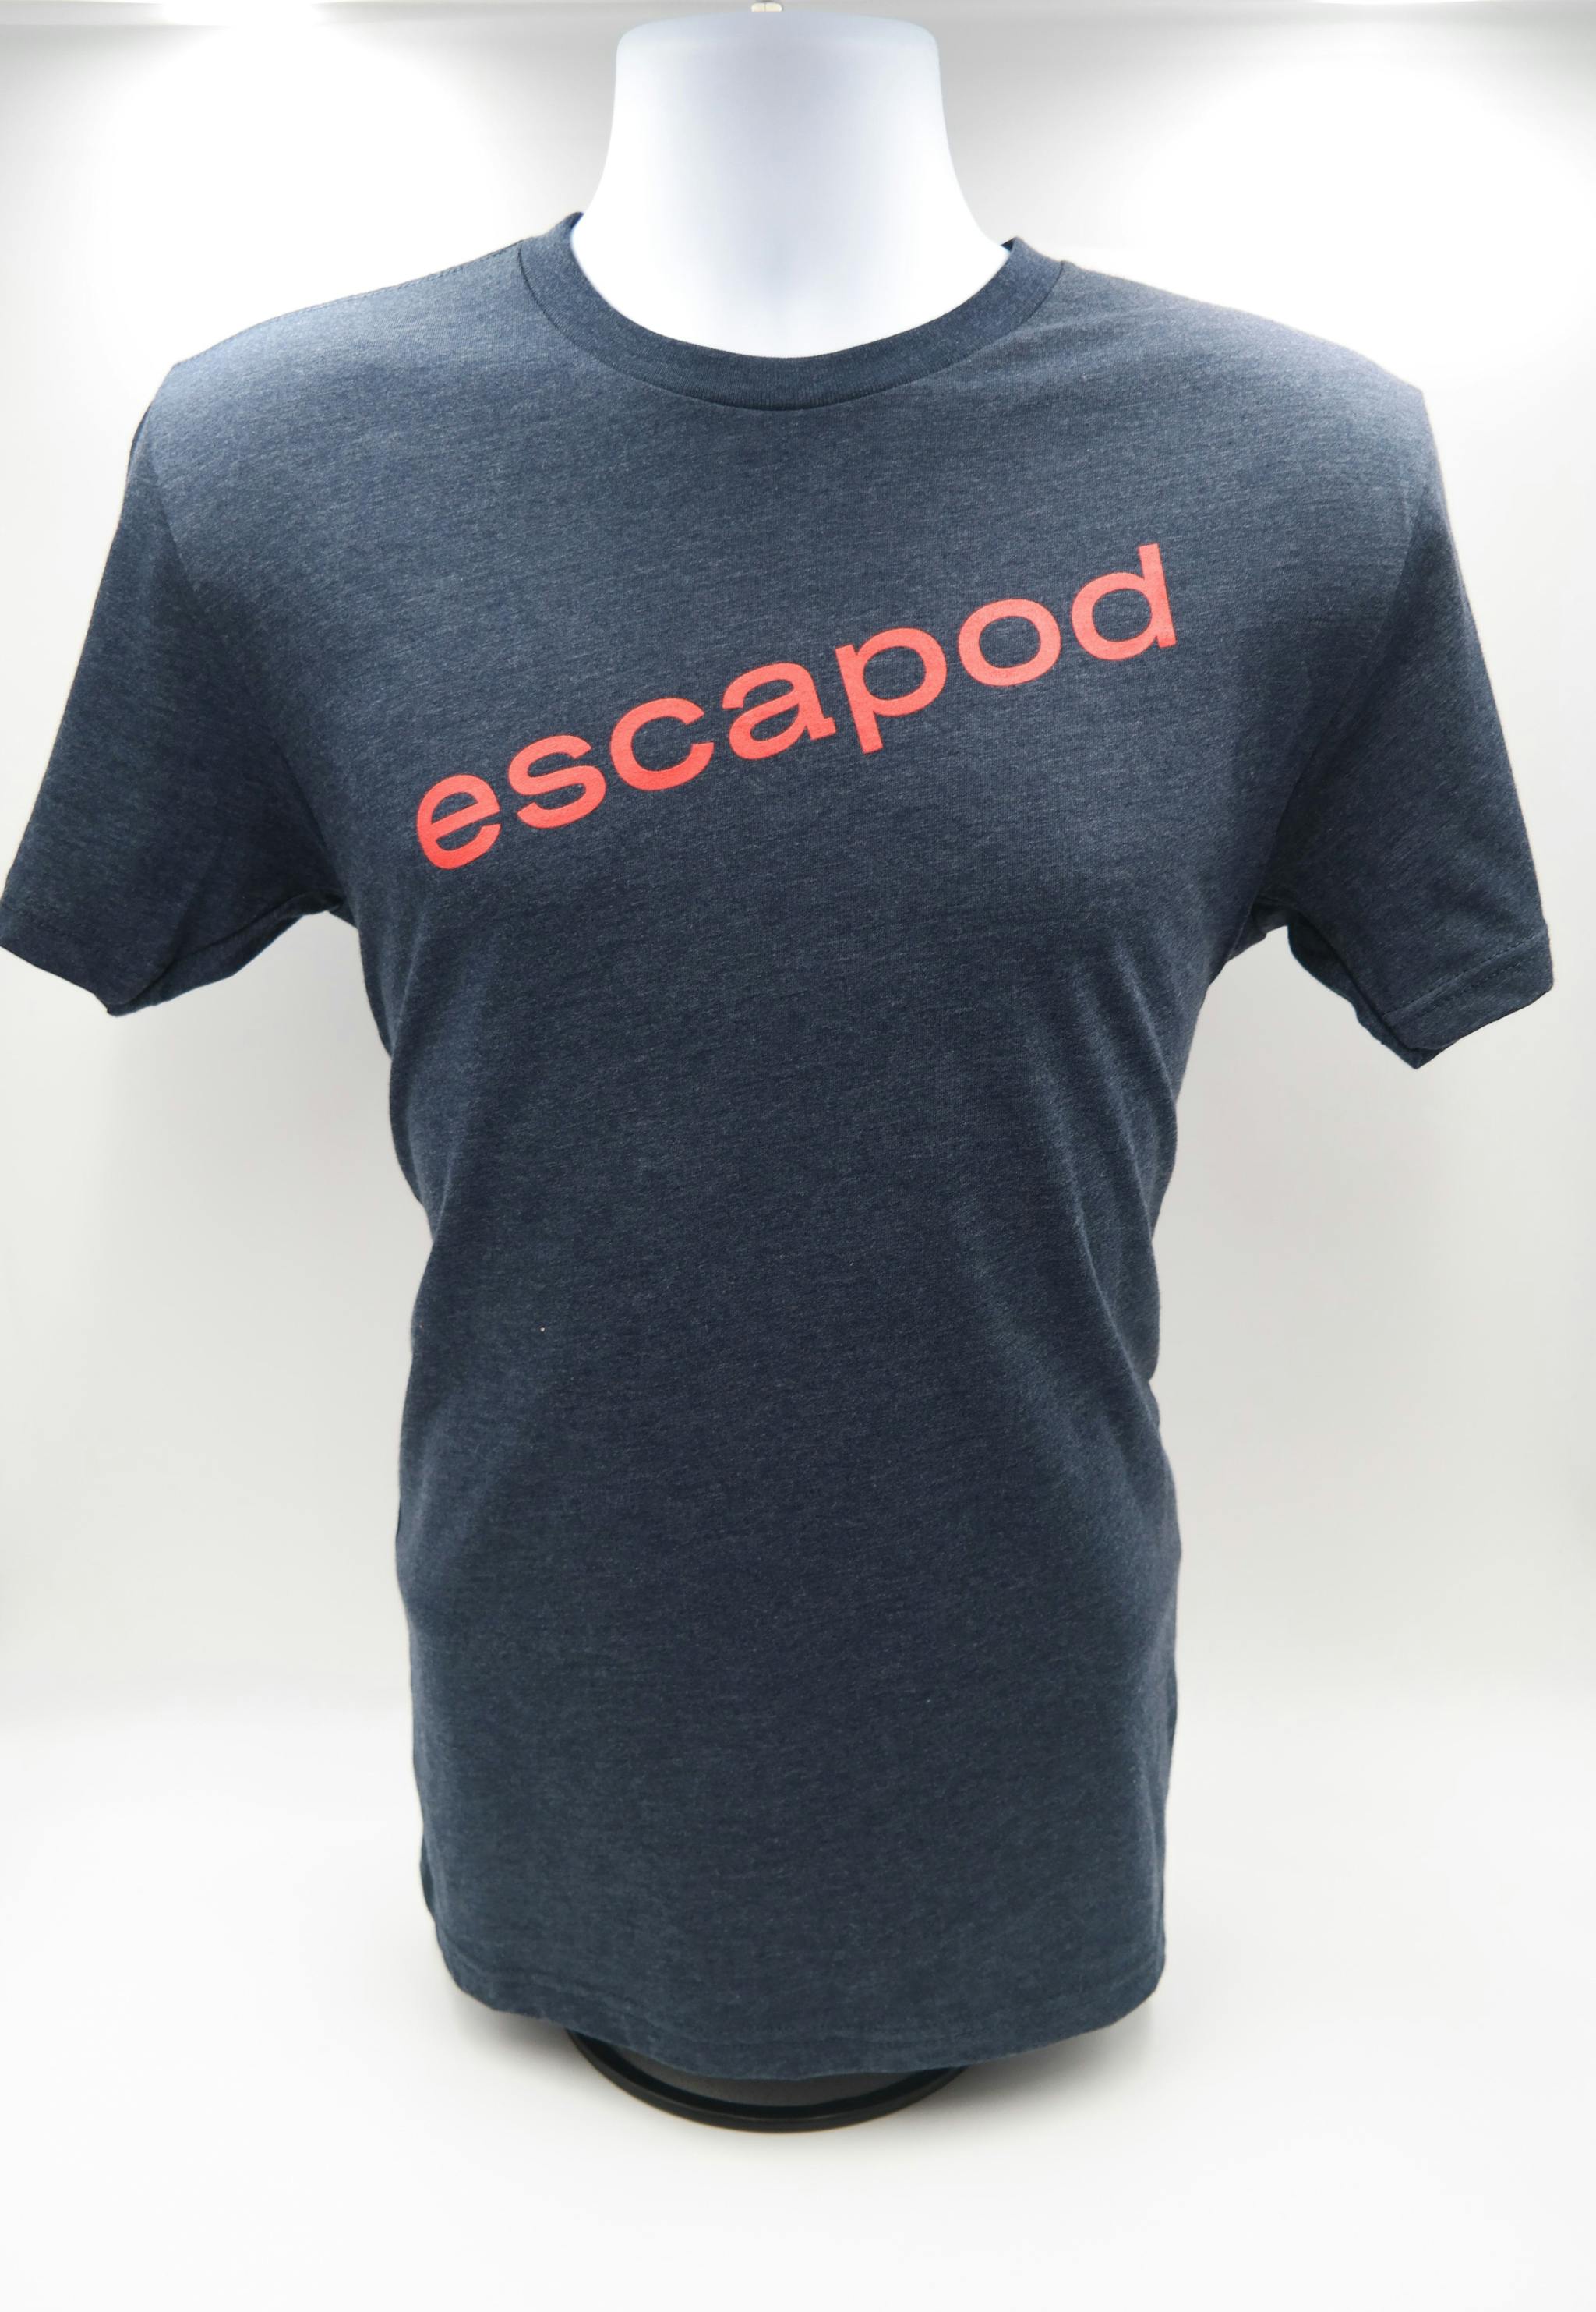 Men's Simple 'escapod' Navy T-Shirt